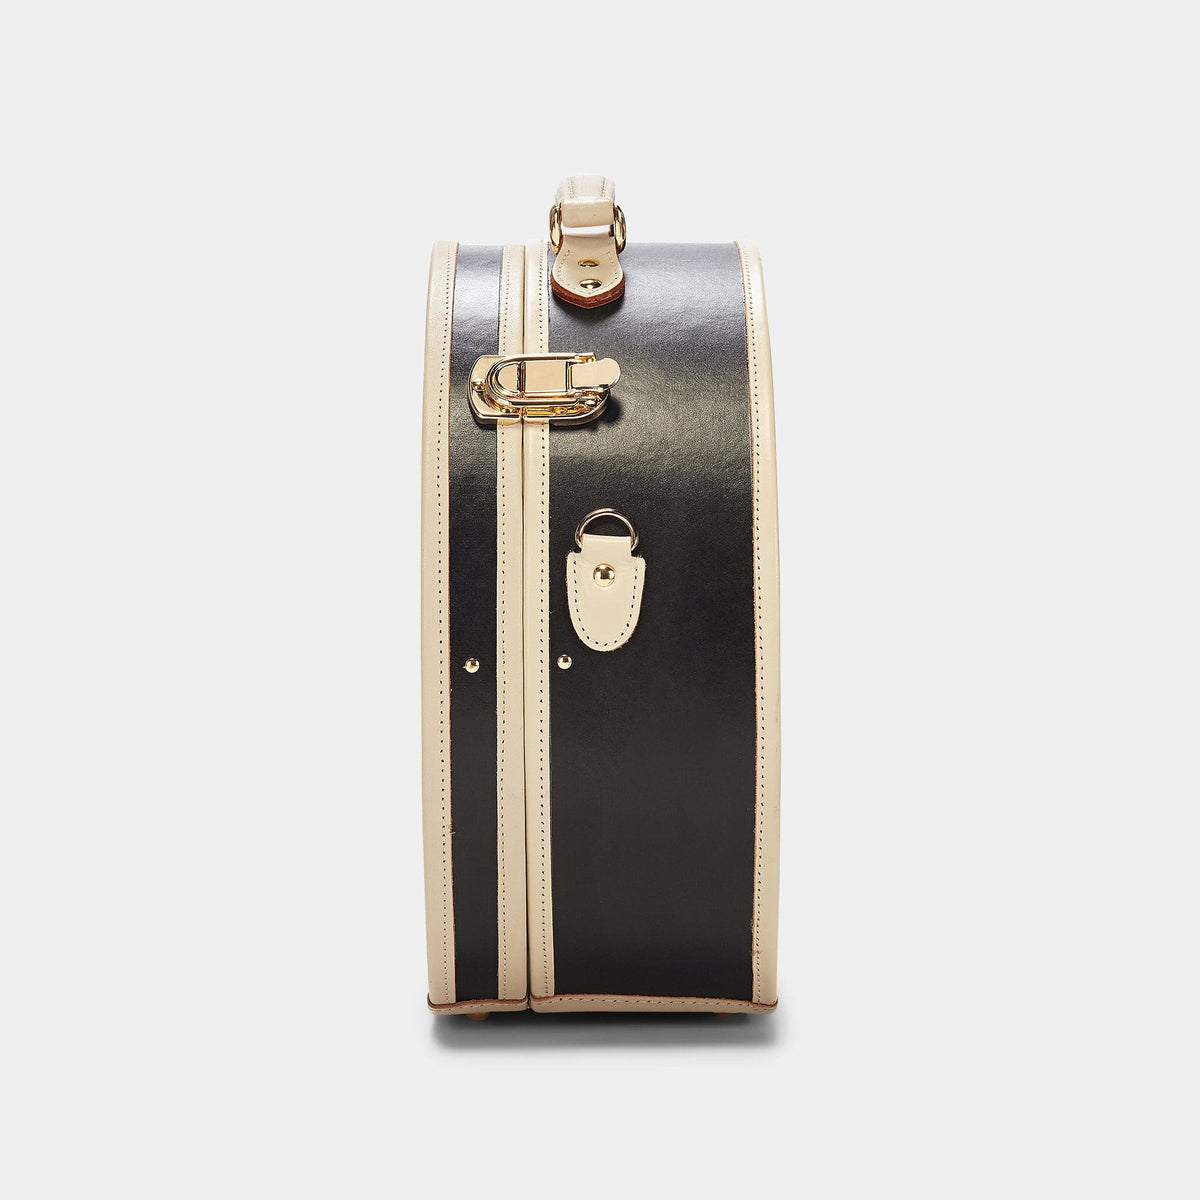 The Correspondent Hatbox  Pink Round Hat Box Luggage Trunk Suitcase –  Steamline Luggage